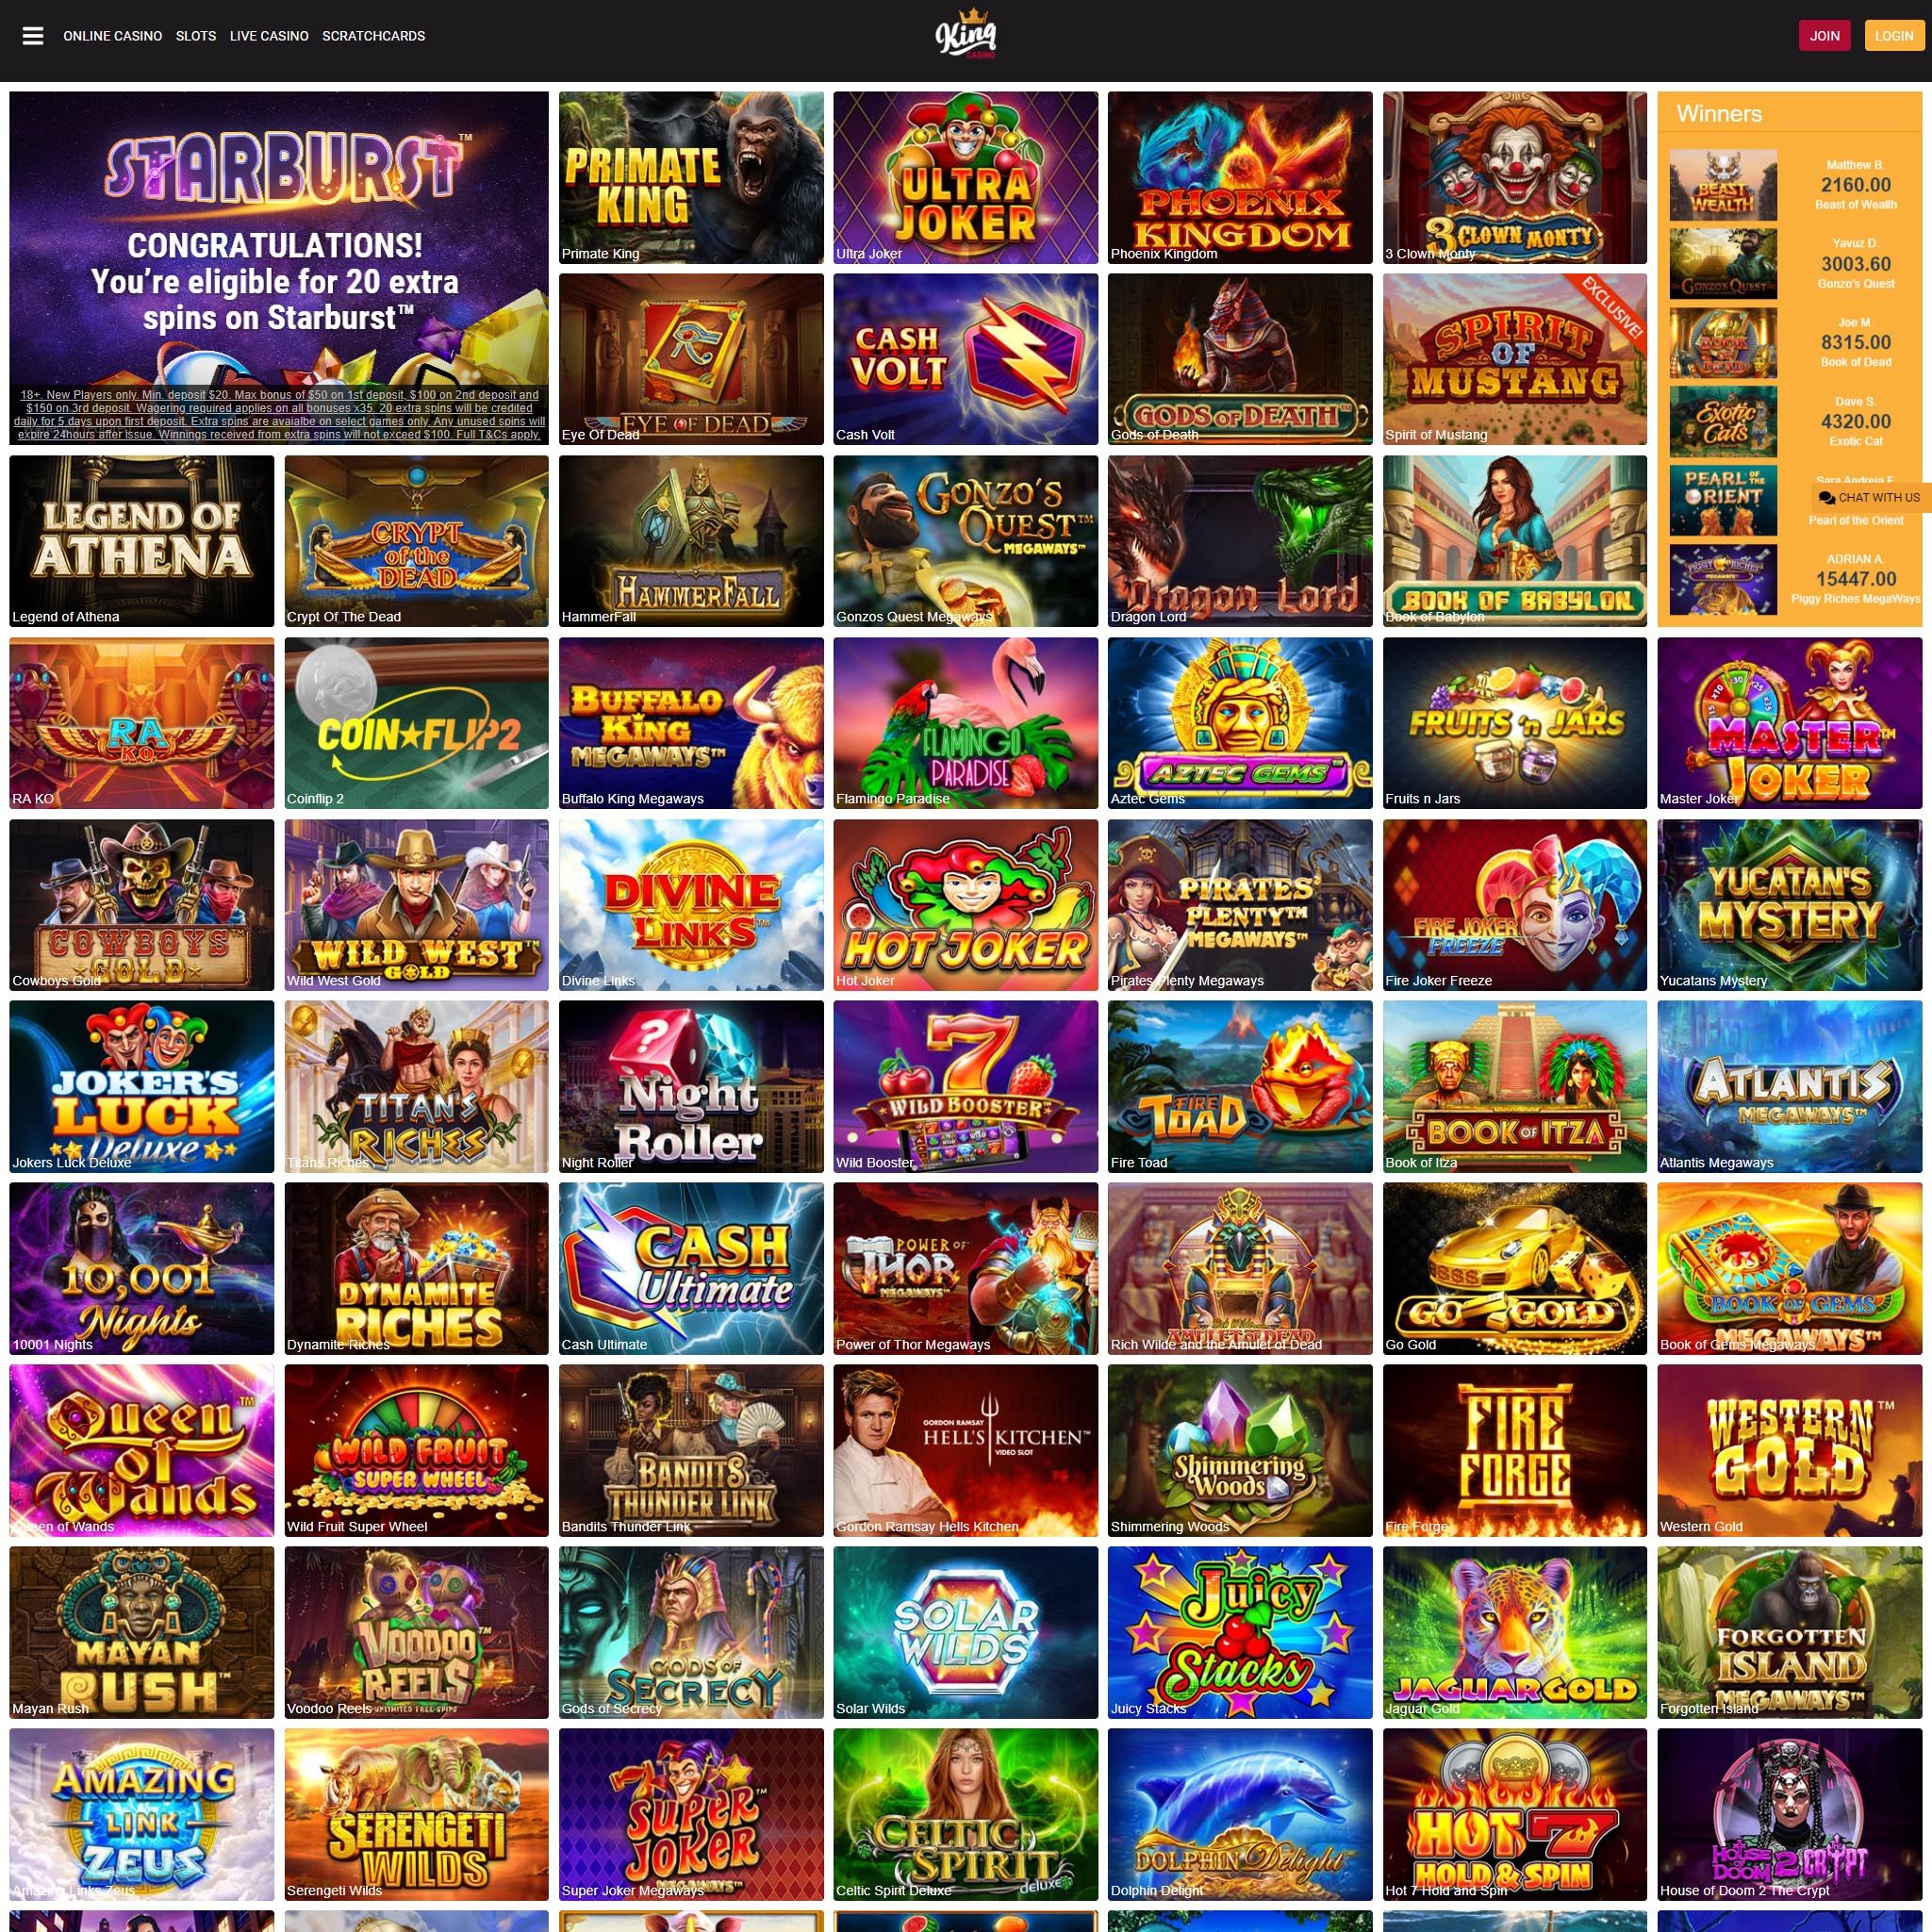 King Casino full games catalogue